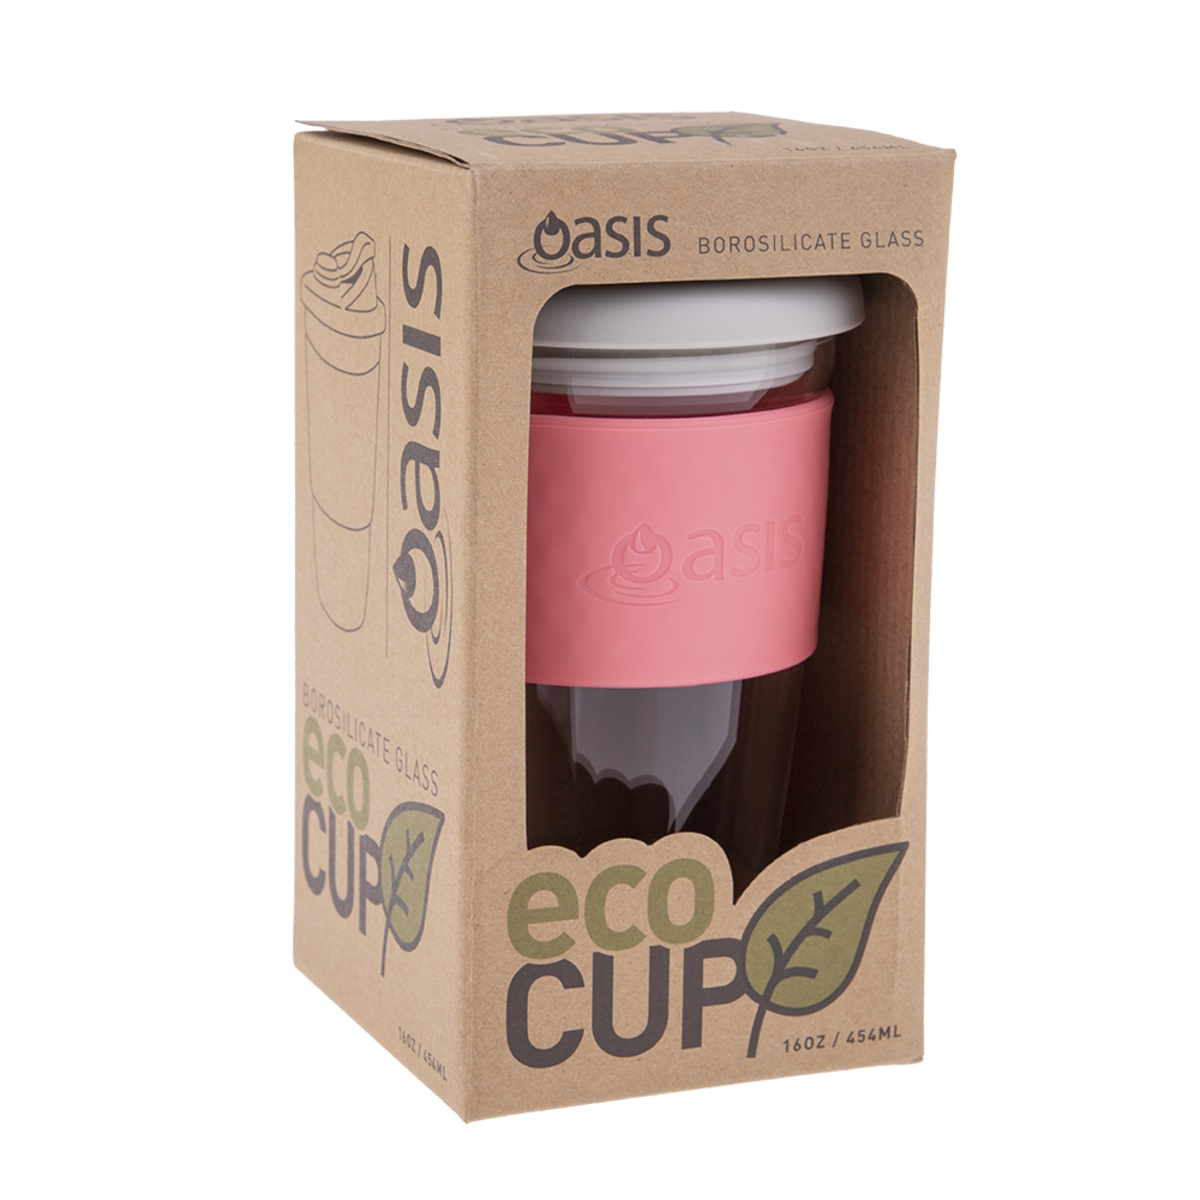 Oasis Borosilicate Glass Eco Cup 16oz-454ml Coral